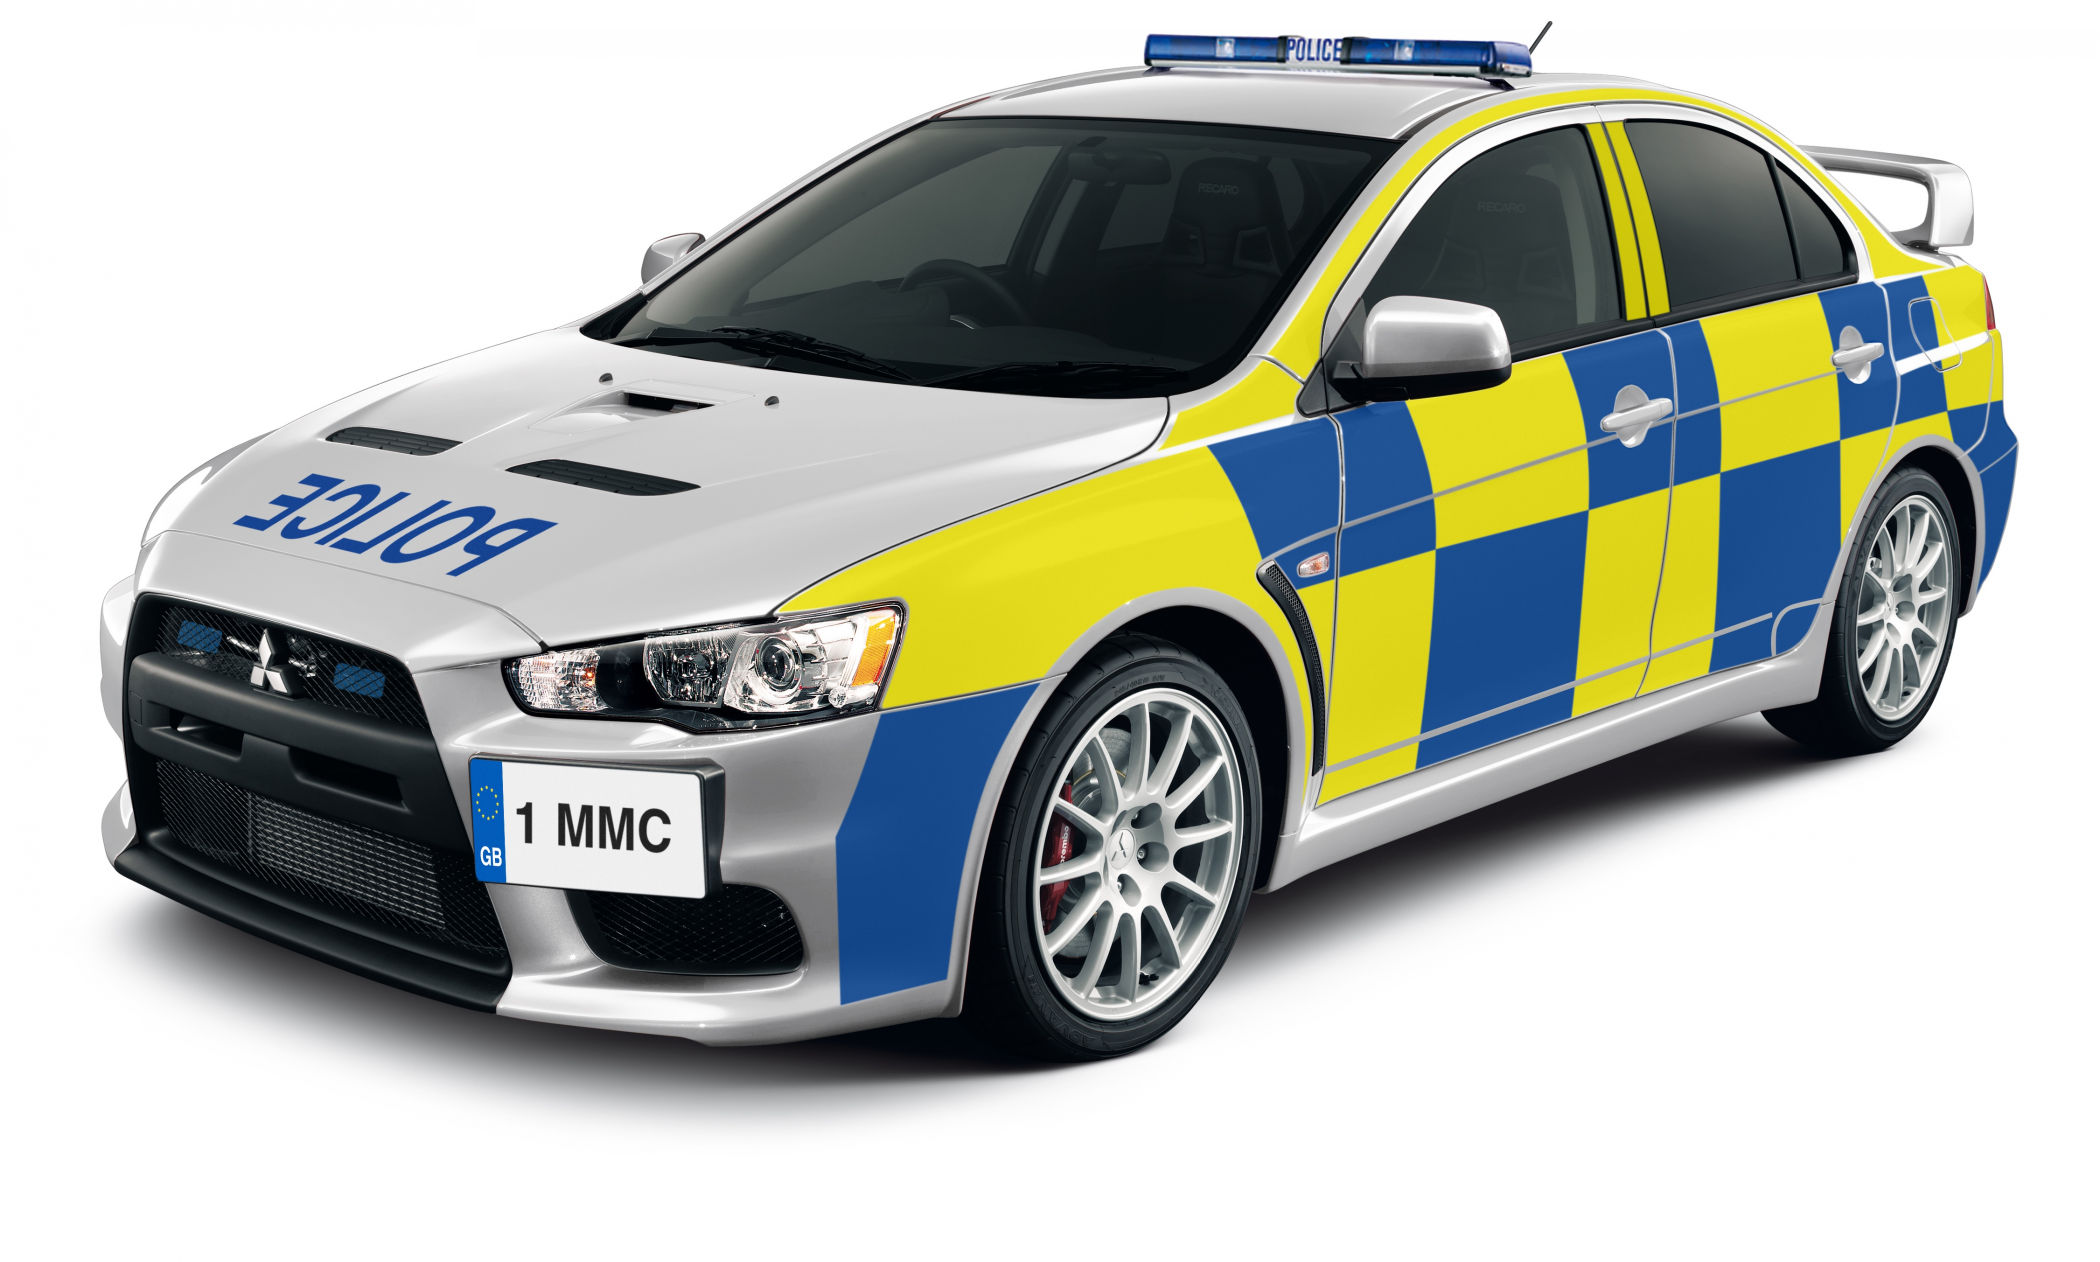 Police Car Hd Lancer Evolution X Uk Pic High Res 281052 Wallpaper wallpaper